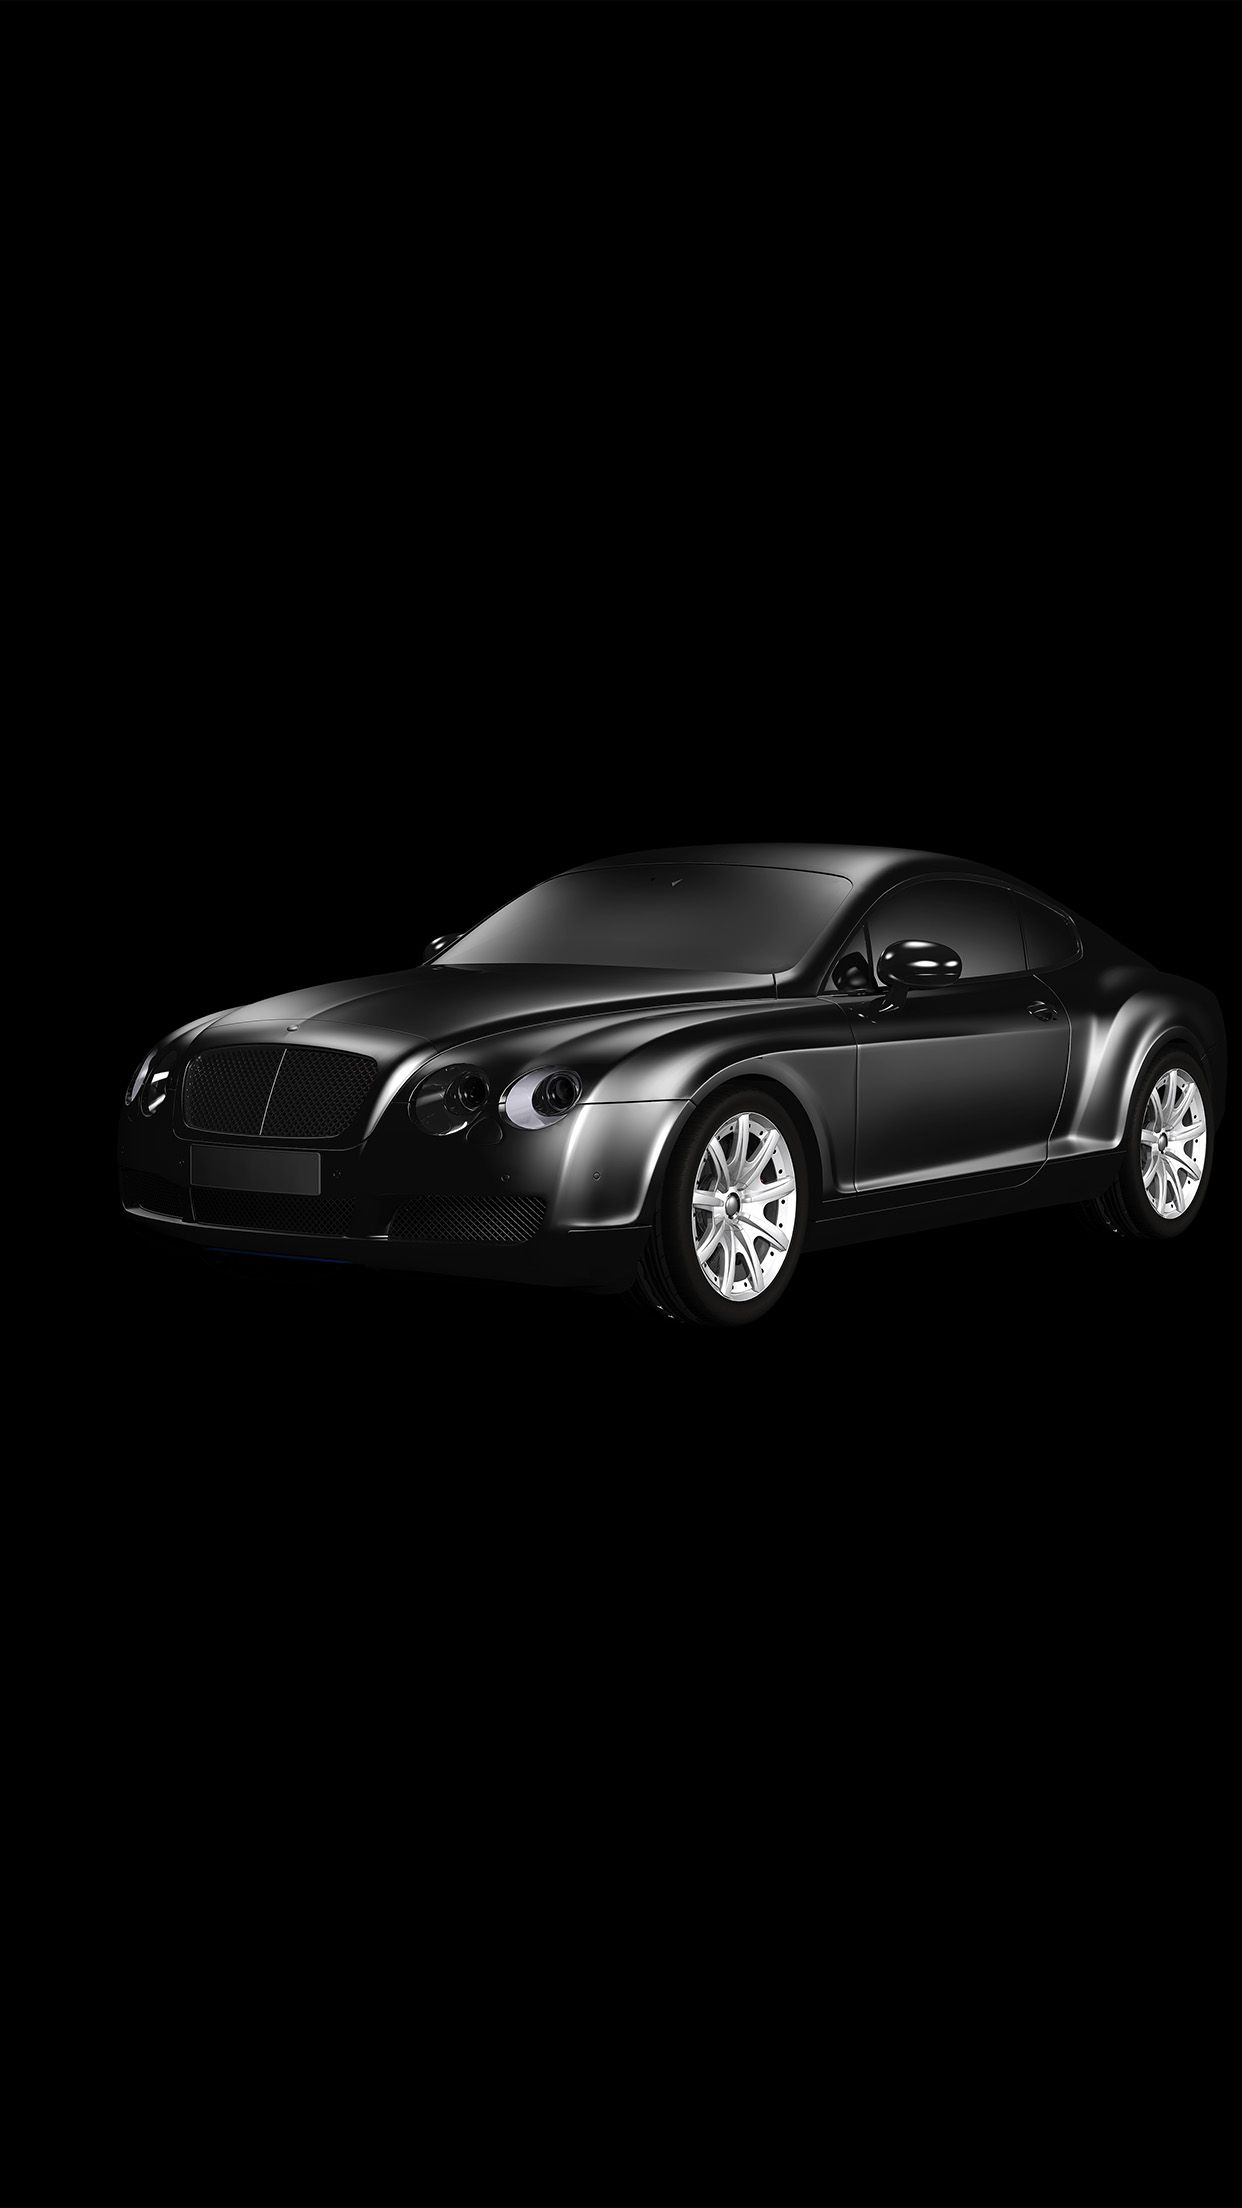 iPhone7 wallpaper. car bentley dark black limousine art illustration